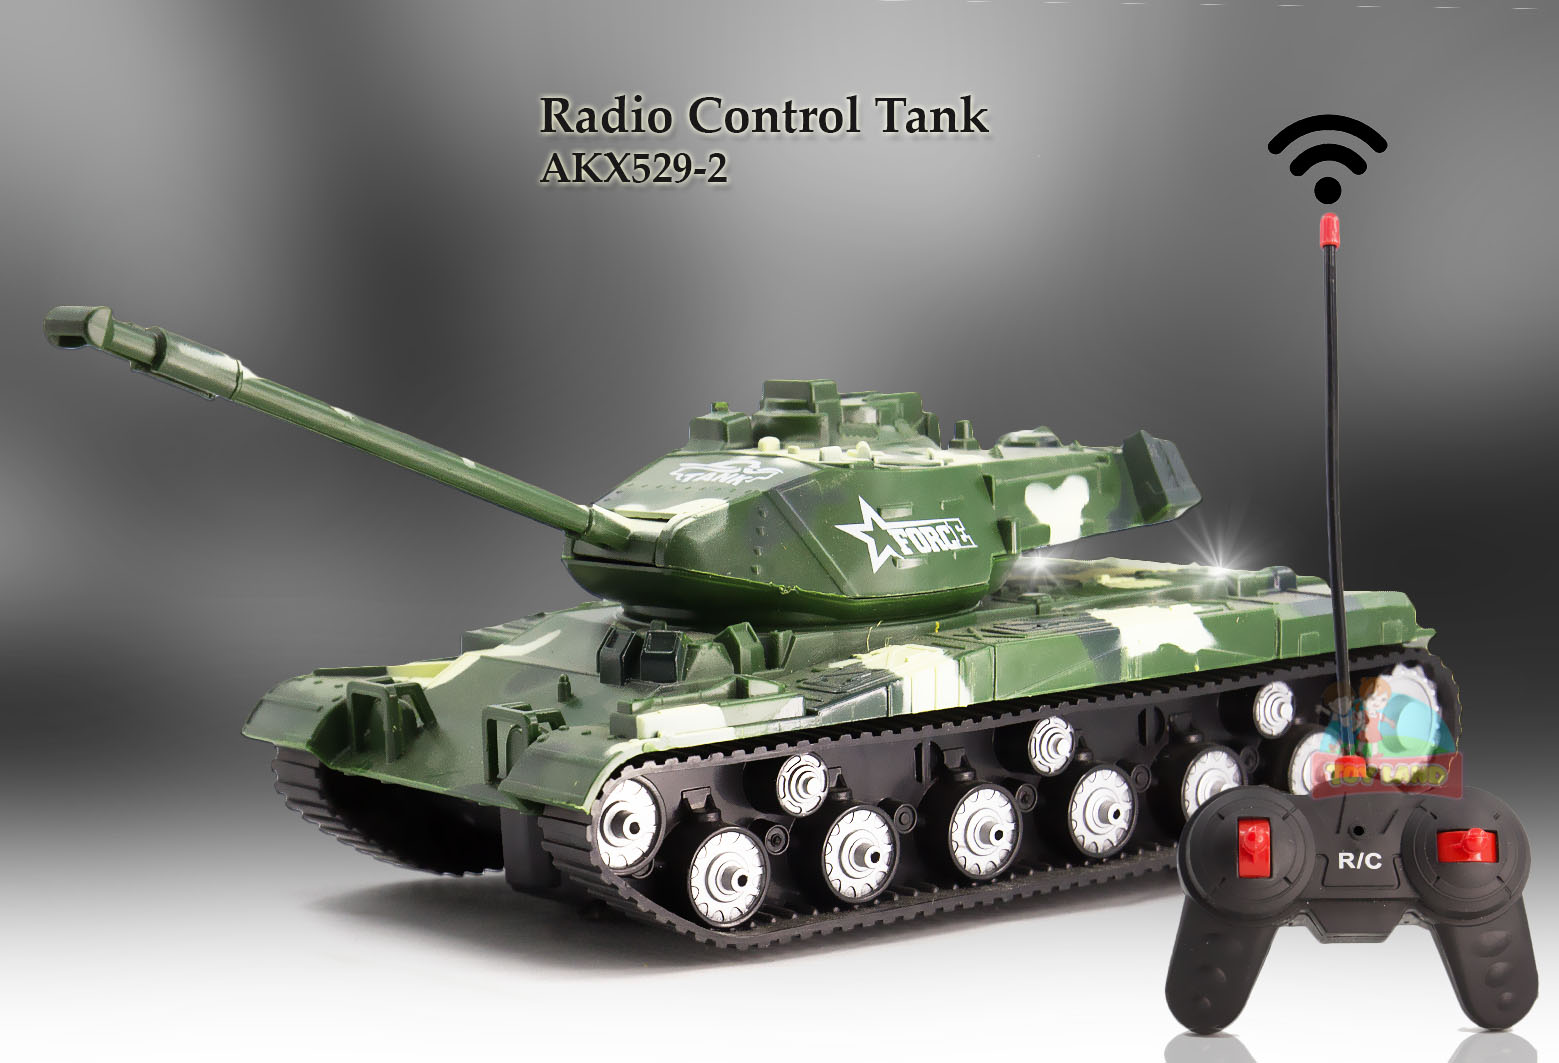 Radio Control Tank : AKX529-2